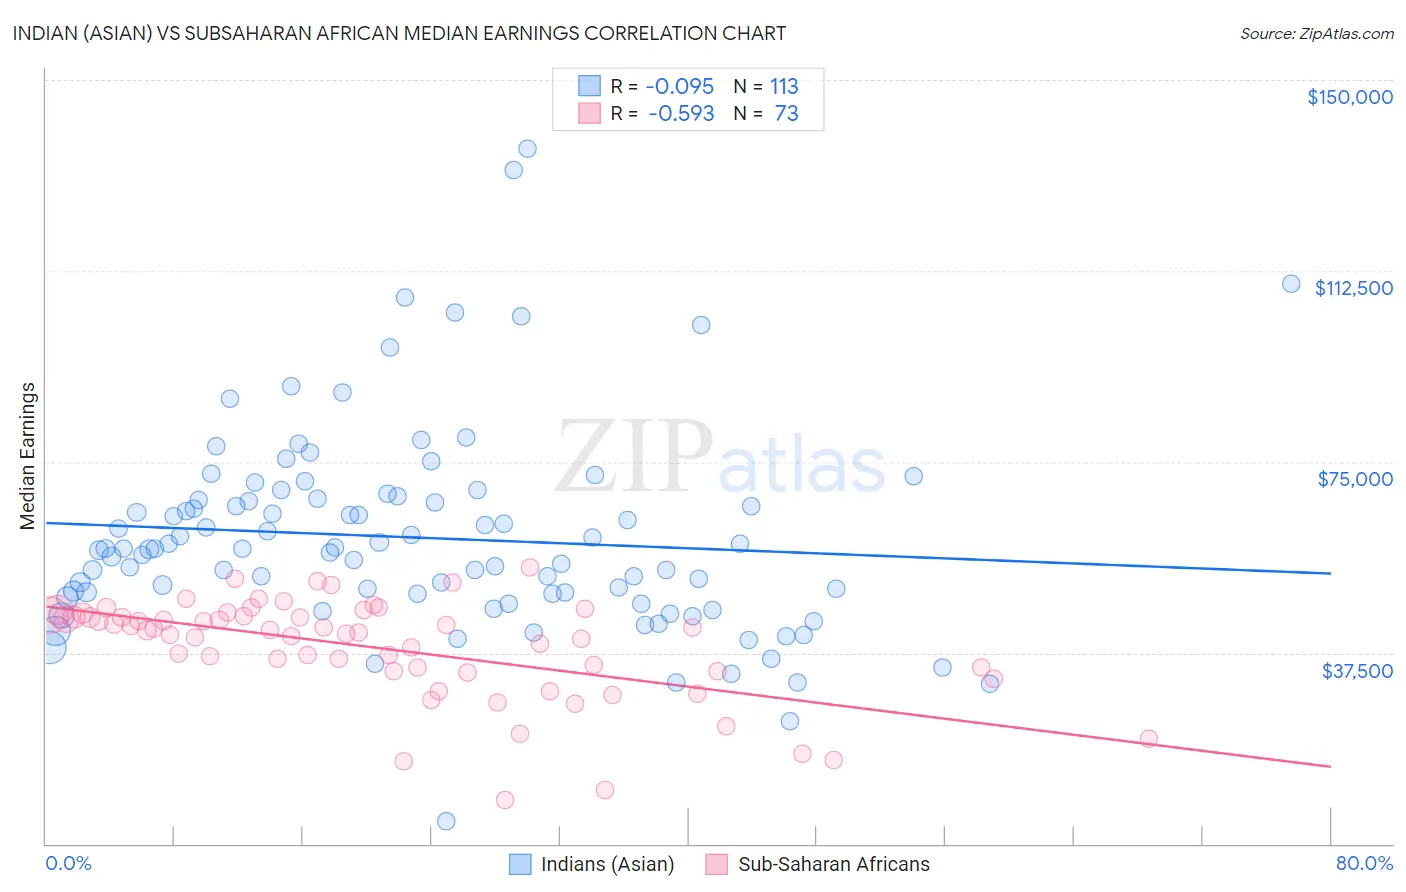 Indian (Asian) vs Subsaharan African Median Earnings